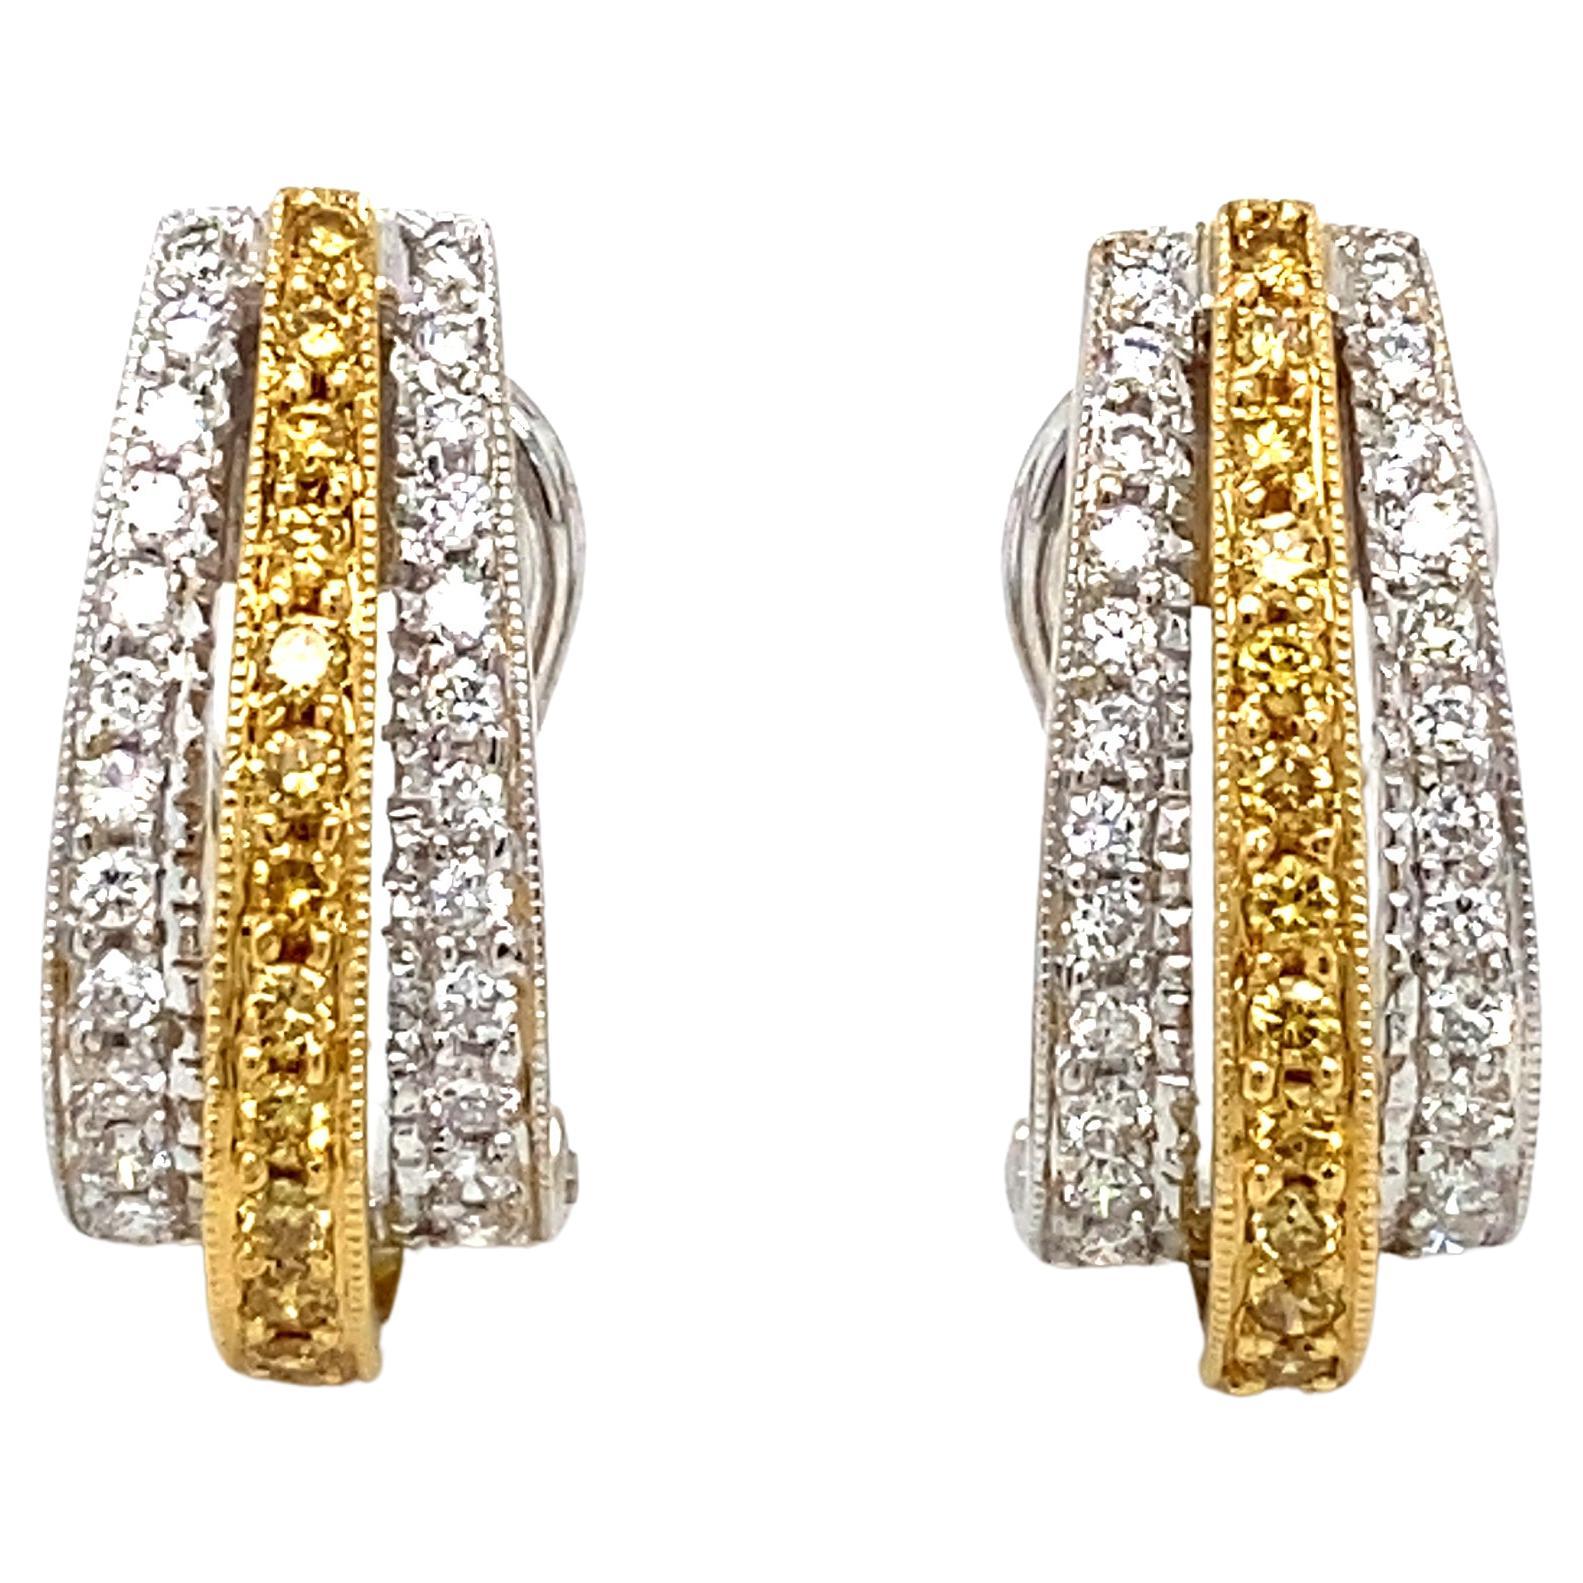 Circa 2010s 2.0 Carat Yellow and White Diamond Earrings in 18 Karat Gold 